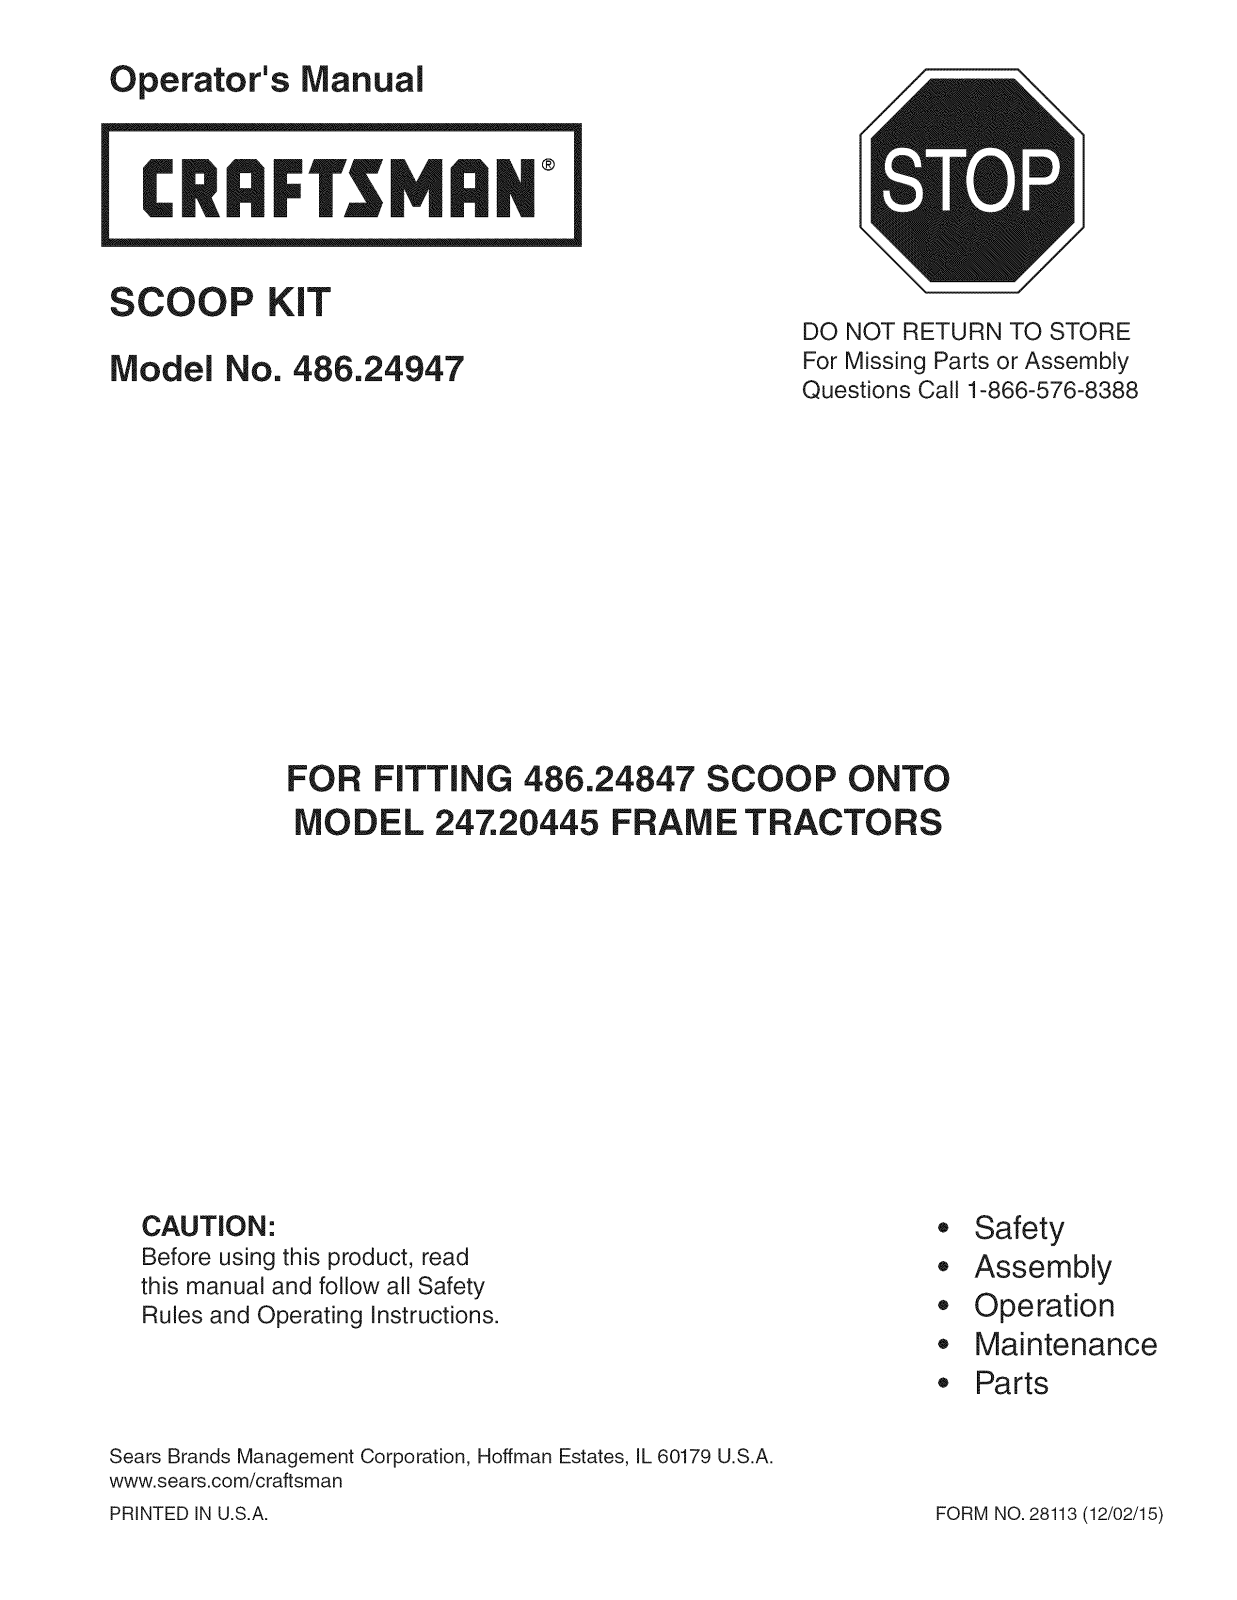 Craftsman 247204450, 486248476, 48624947, 486248475, 486248474 Owner’s Manual